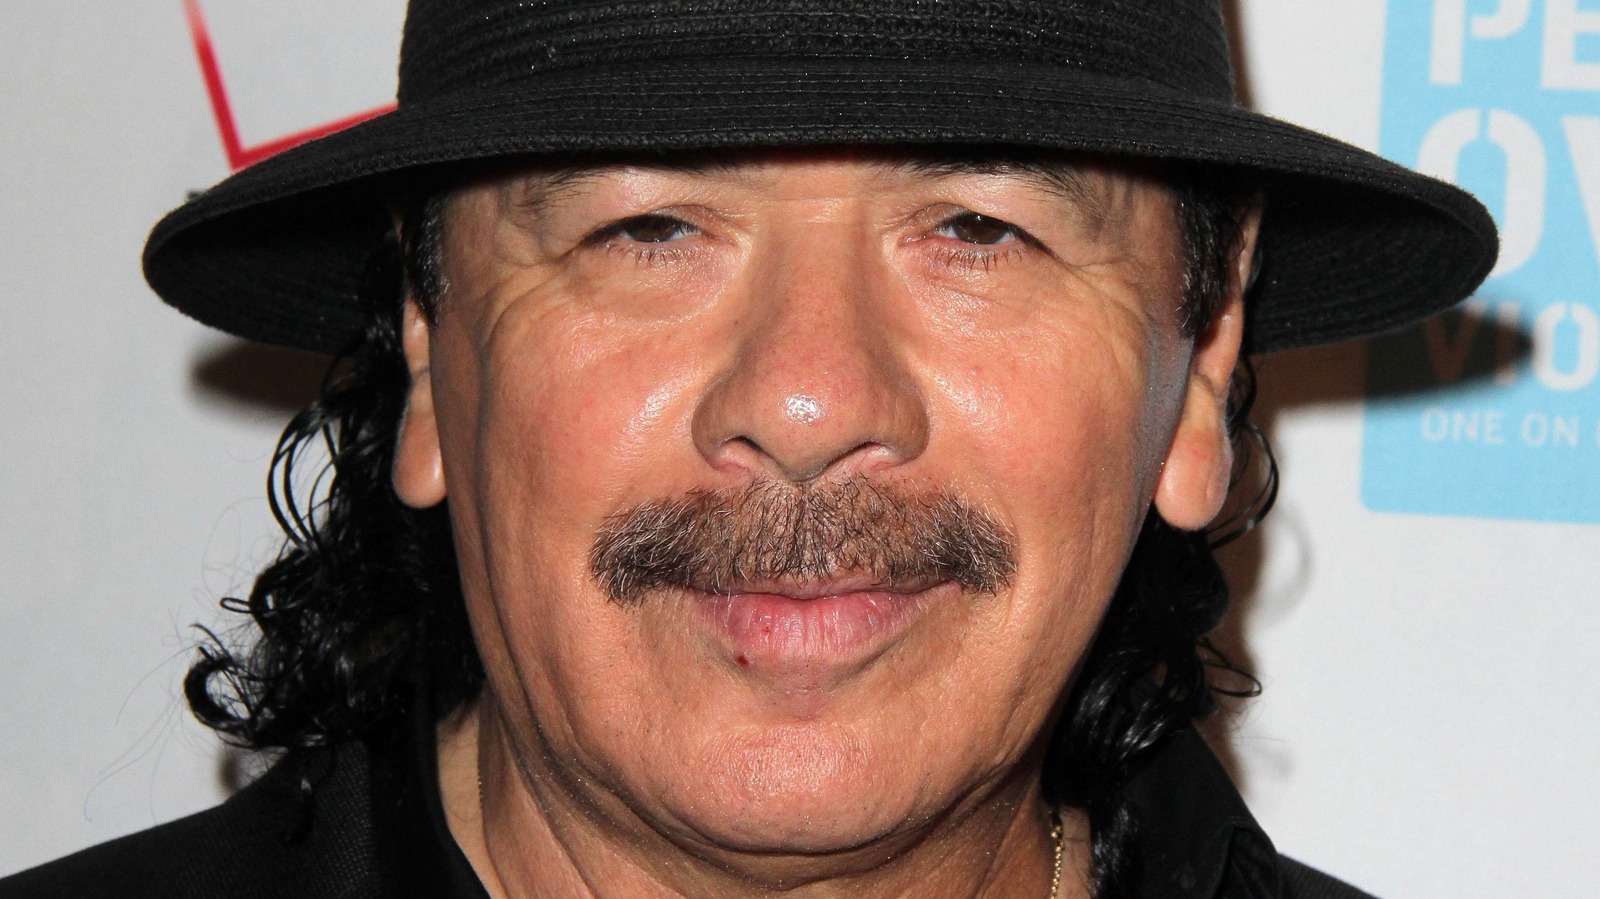 Carlos Santana's Wife Files for Divorce